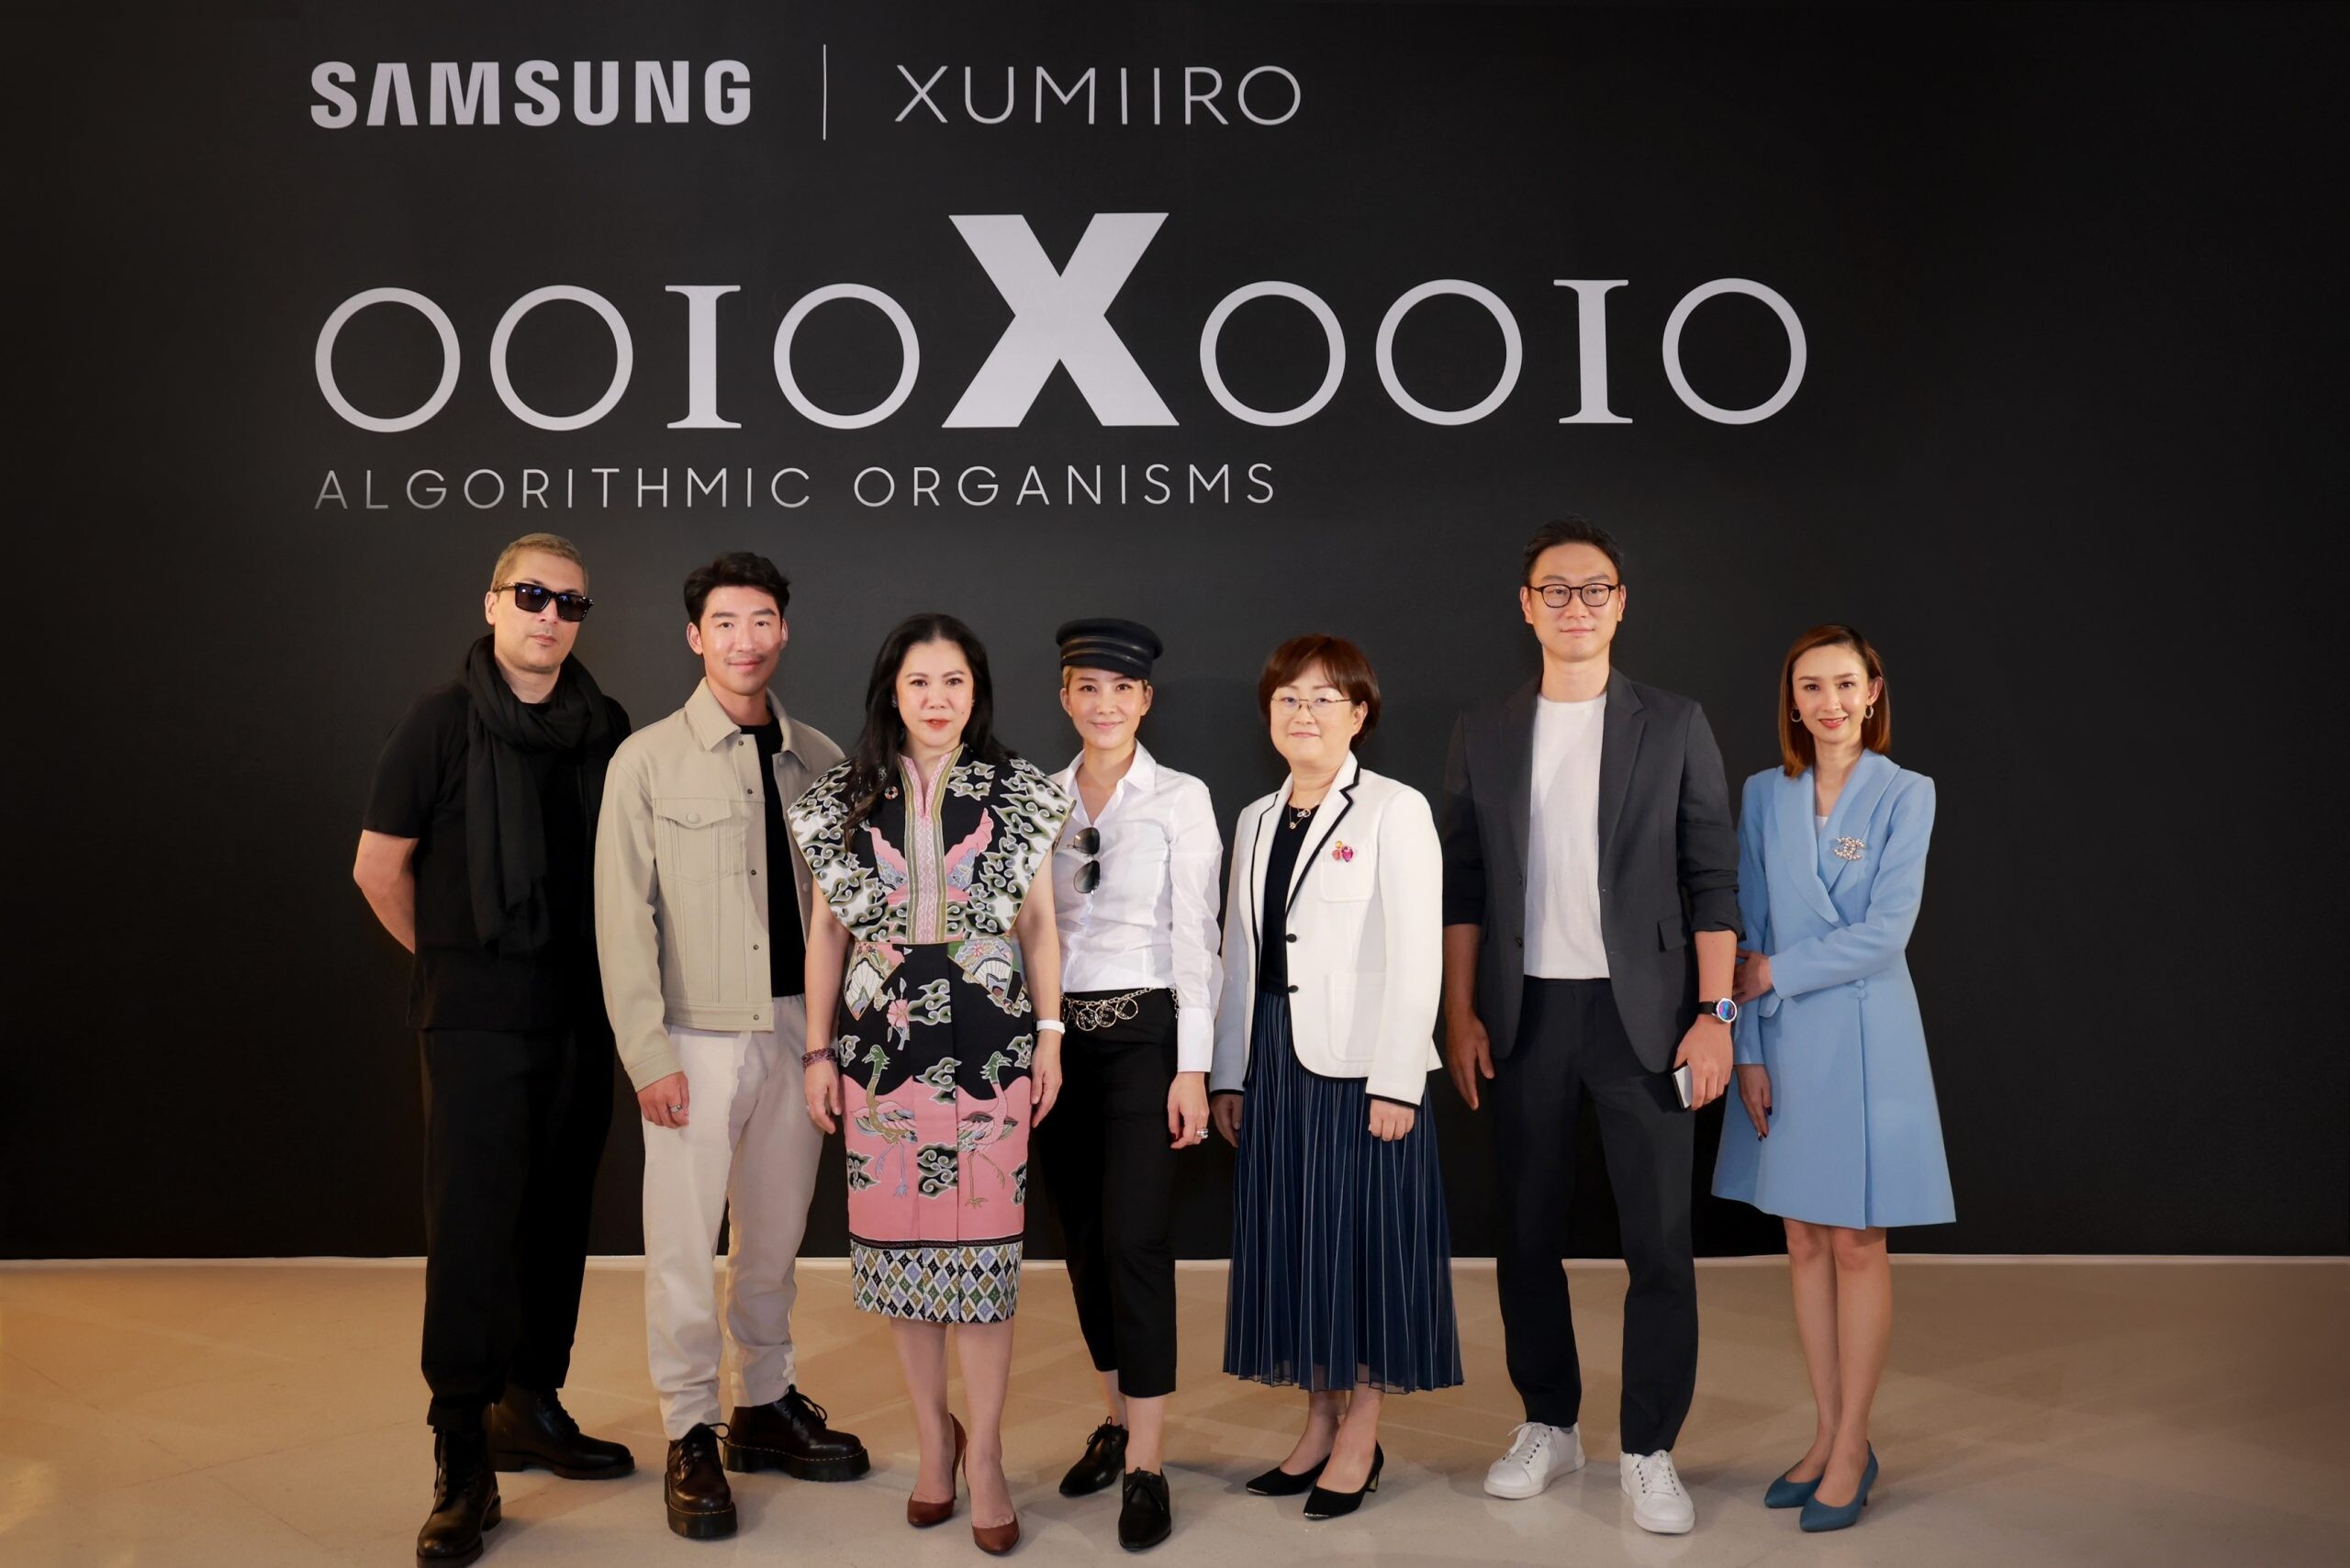 Samsung I Xumiiro I MOCA Bangkok จับมือสร้างปรากฏการณ์ครั้งสำคัญ เปิดนิทรรศการดิจิทัลอาร์ต "Algorithmic Organisms" จากศิลปินระดับโลก 0010x0010